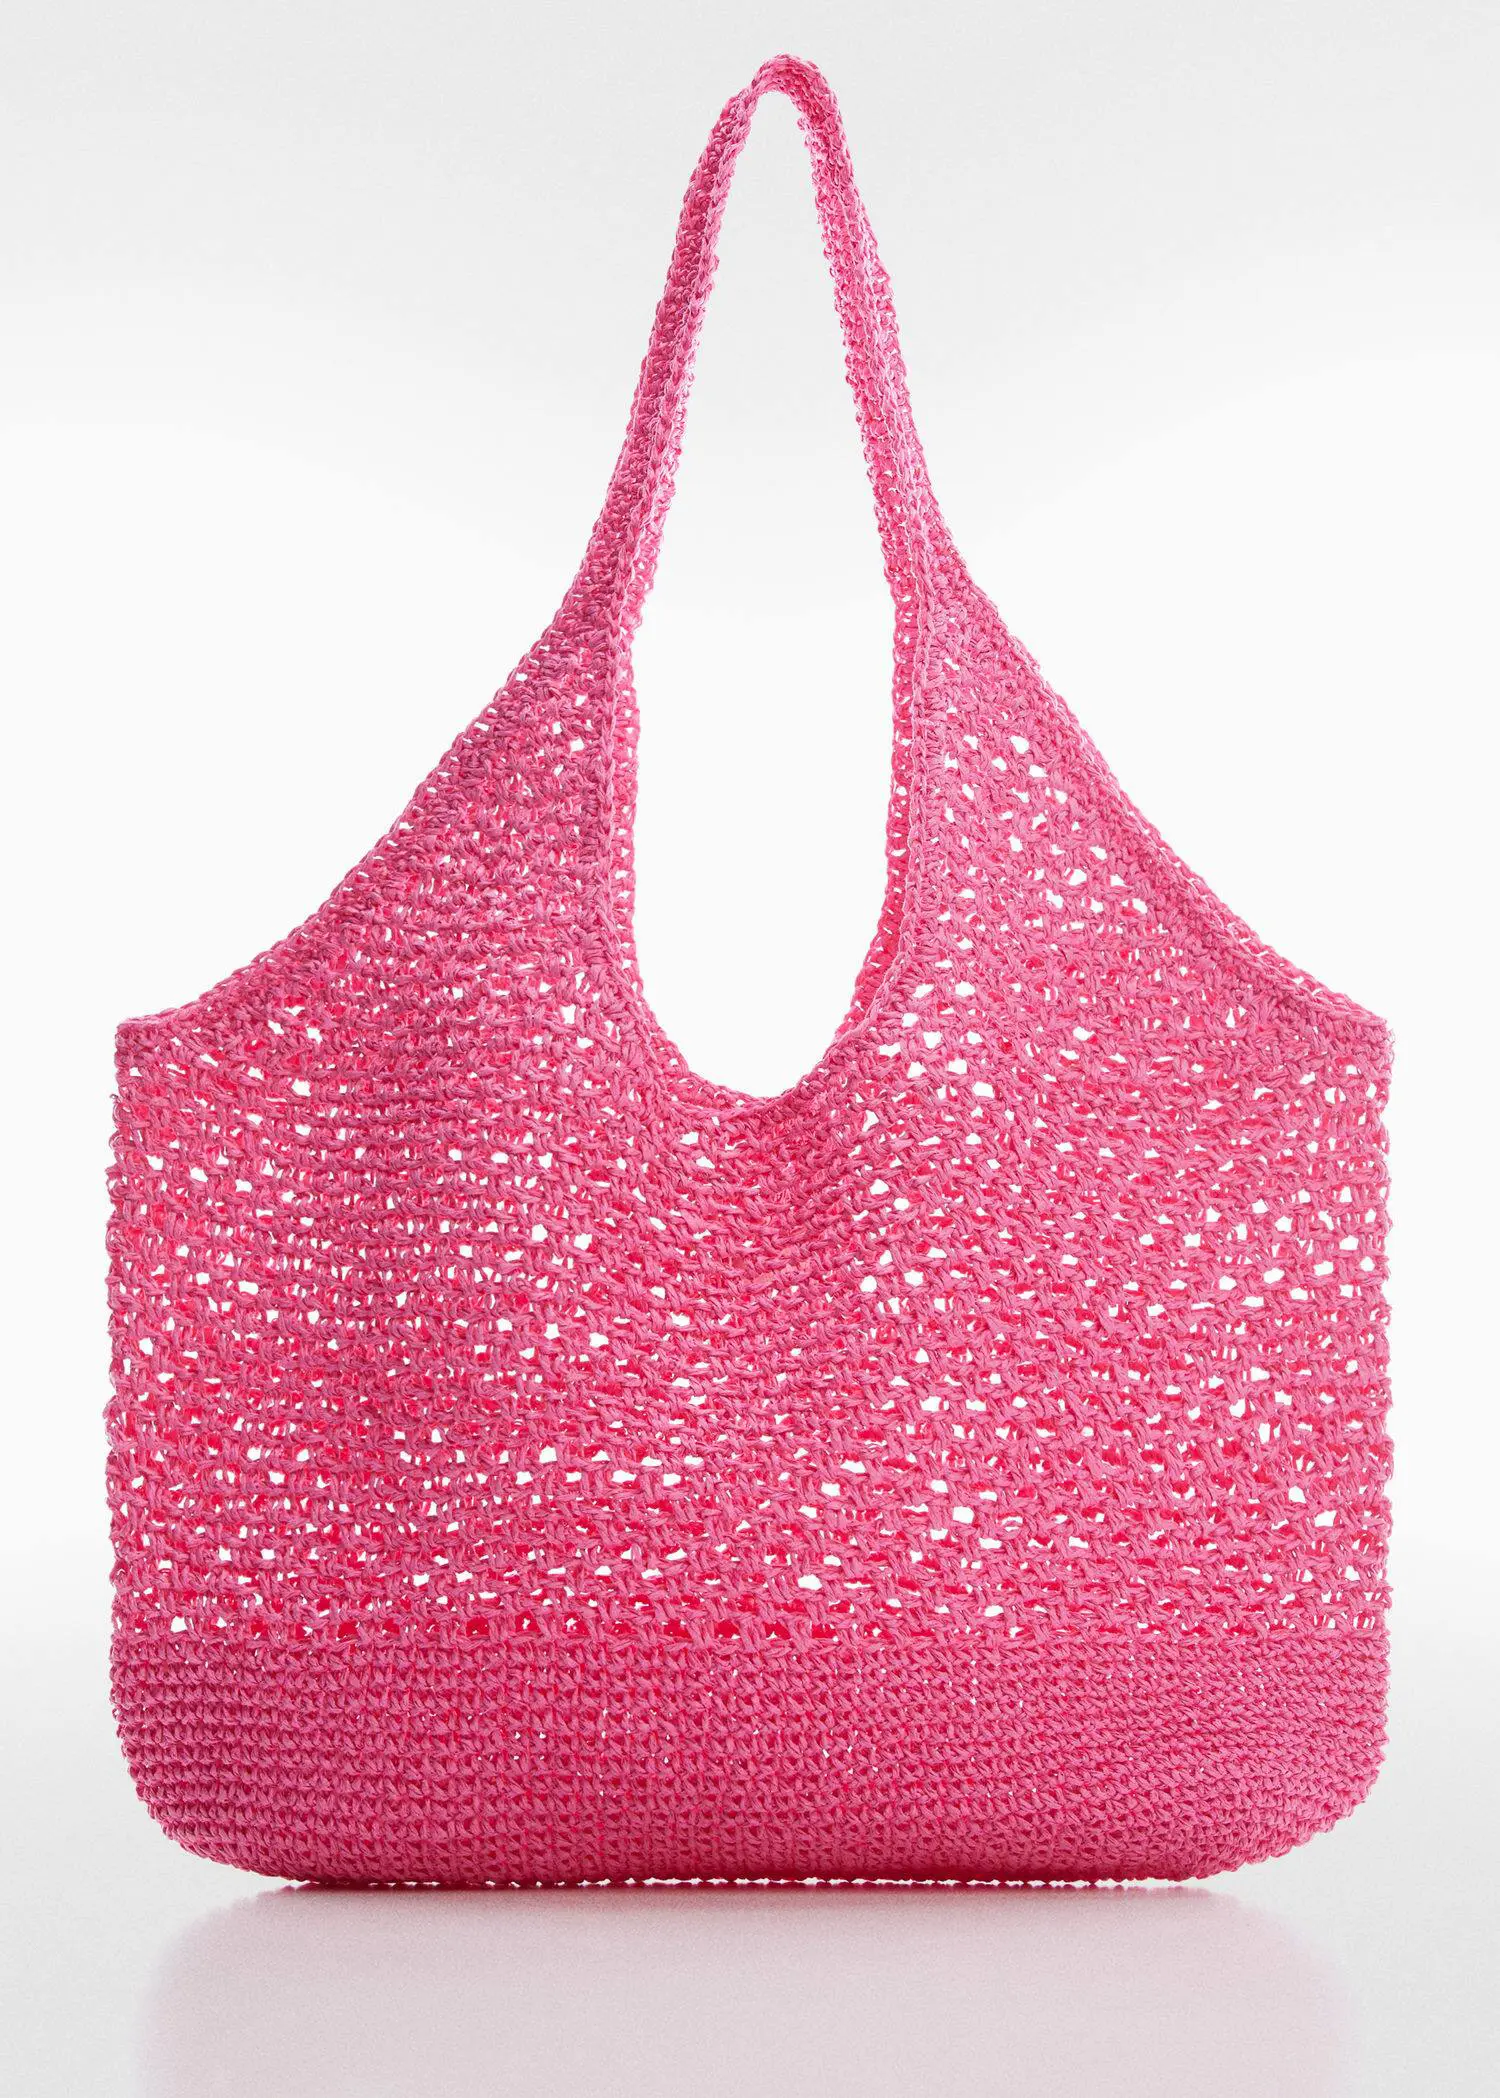 Mango Natural fibre sack bag. a close-up of a crocheted pink bag. 